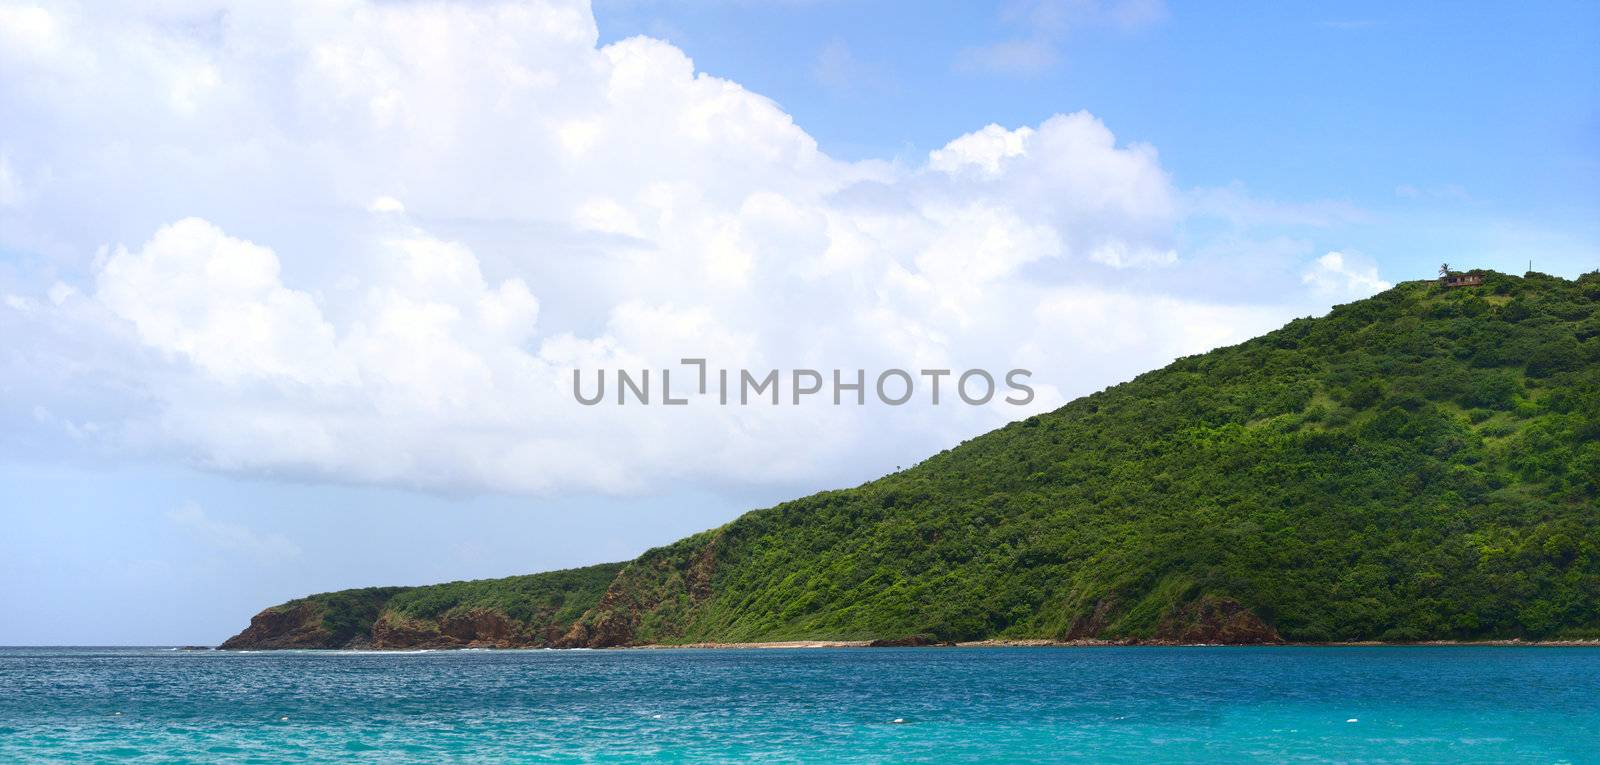 The far eastern shore across from Flamenco beach on the beautiful Puerto Rican island of Culebra.